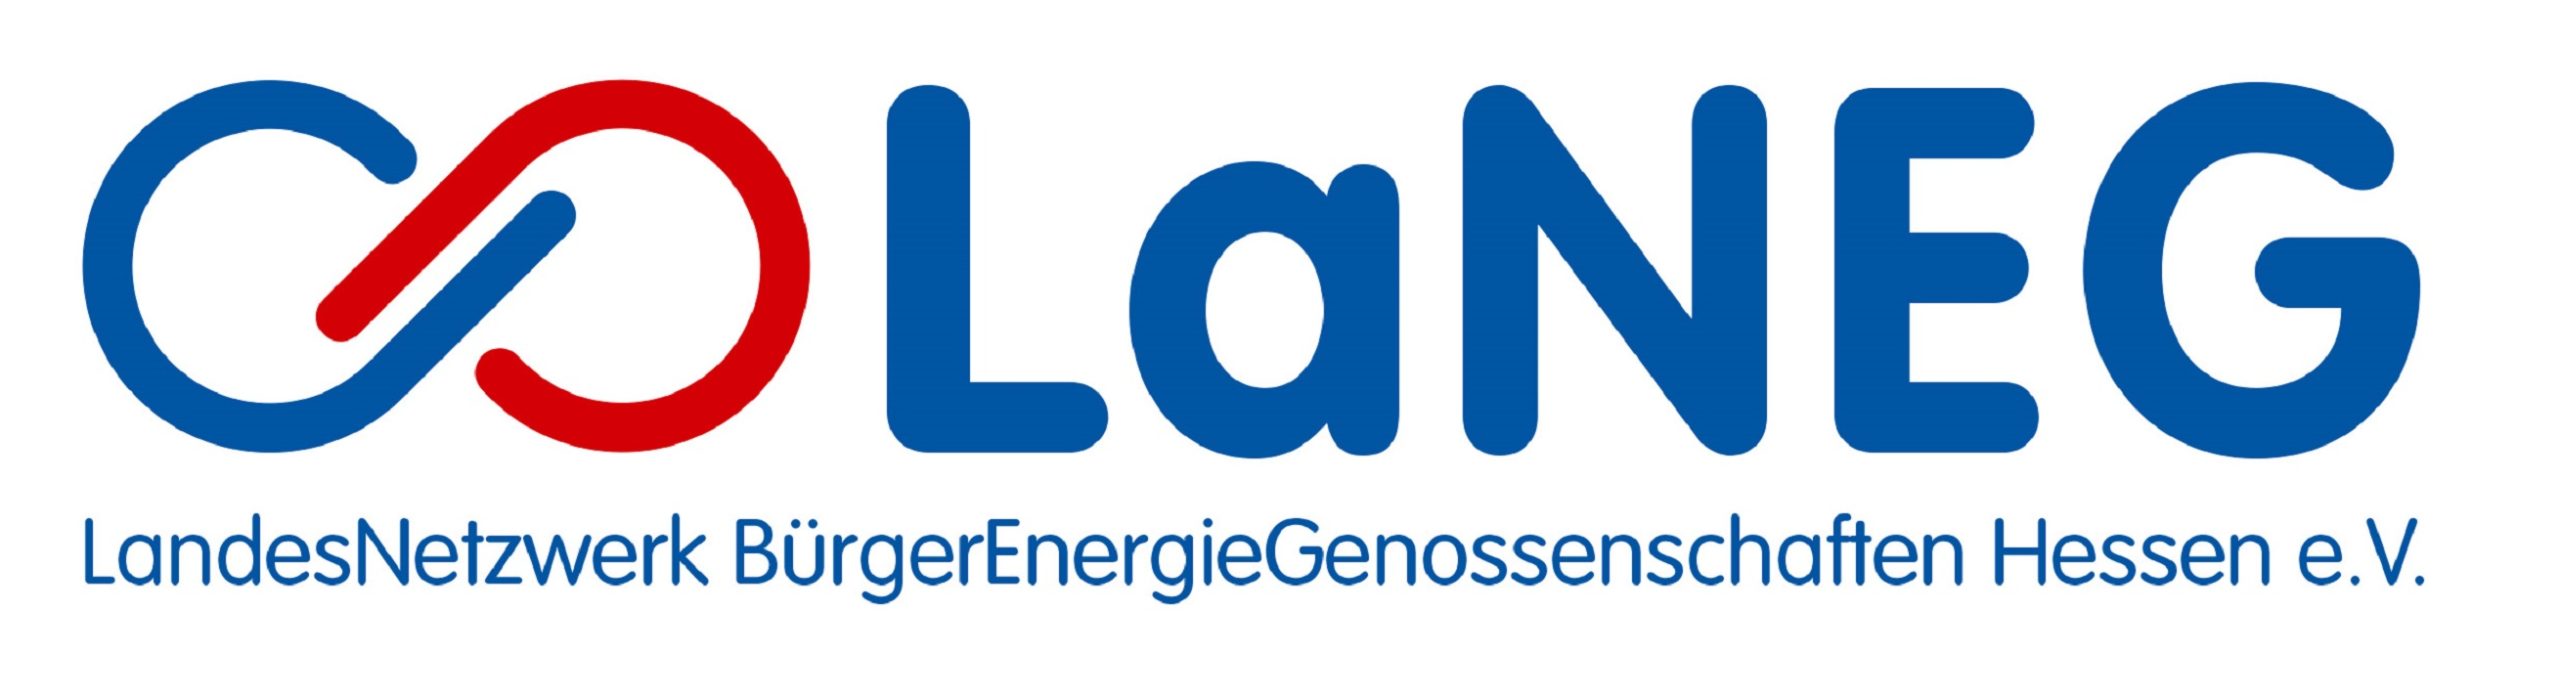 LaNEG e.V. – Landesnetzwerk BürgerEnergieGenossenschaften Hessen